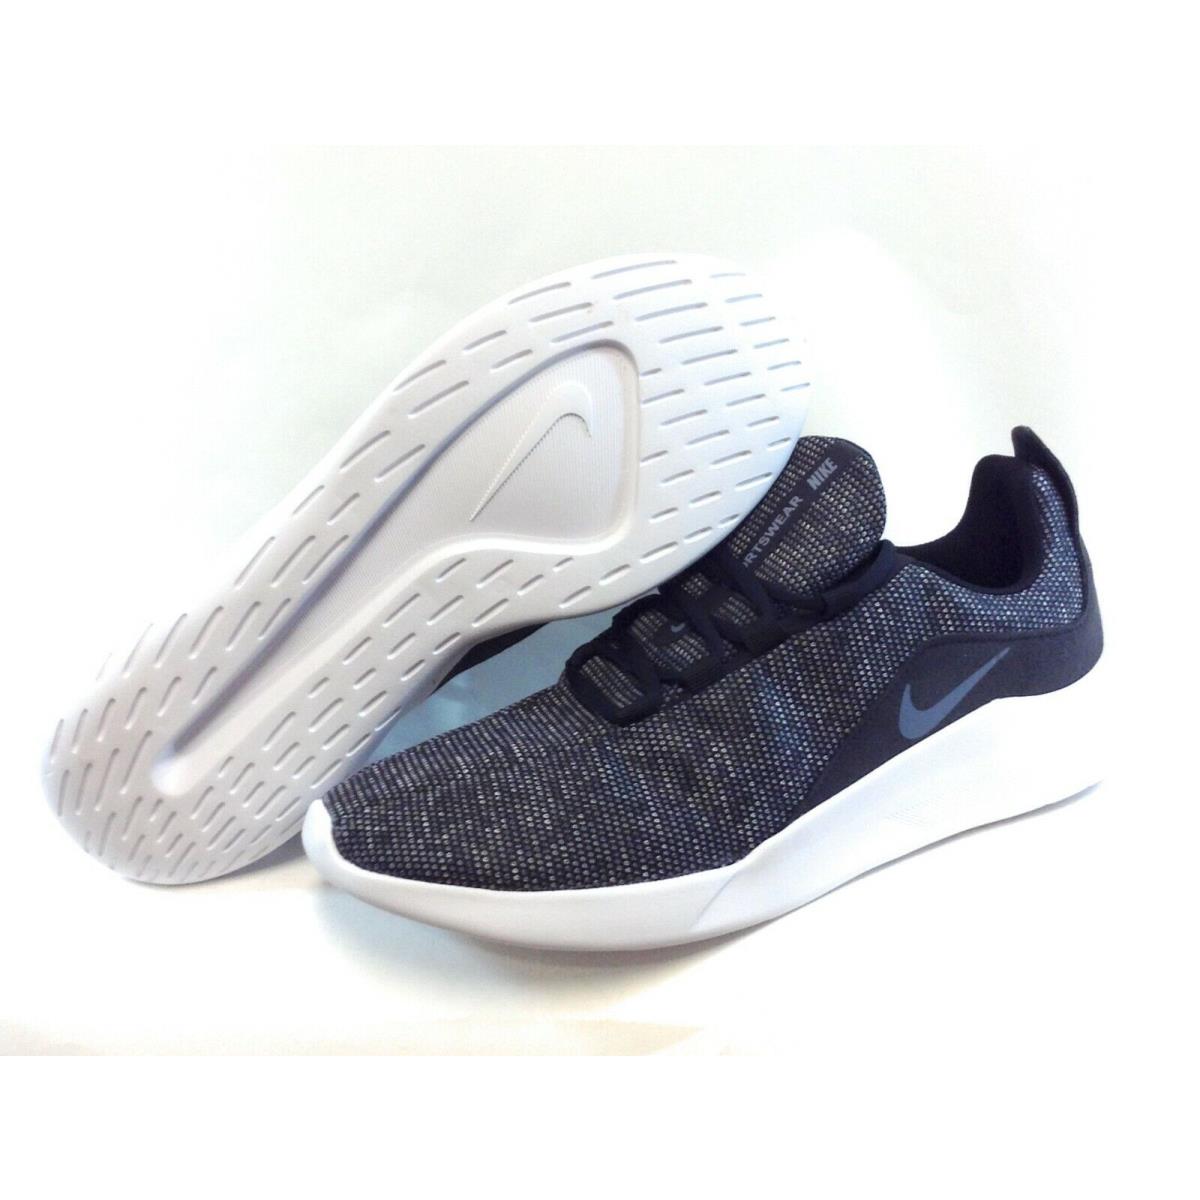 Womens Nike Viale Premier AQ2233 001 Black Grey White Running Sneakers Shoes - Black